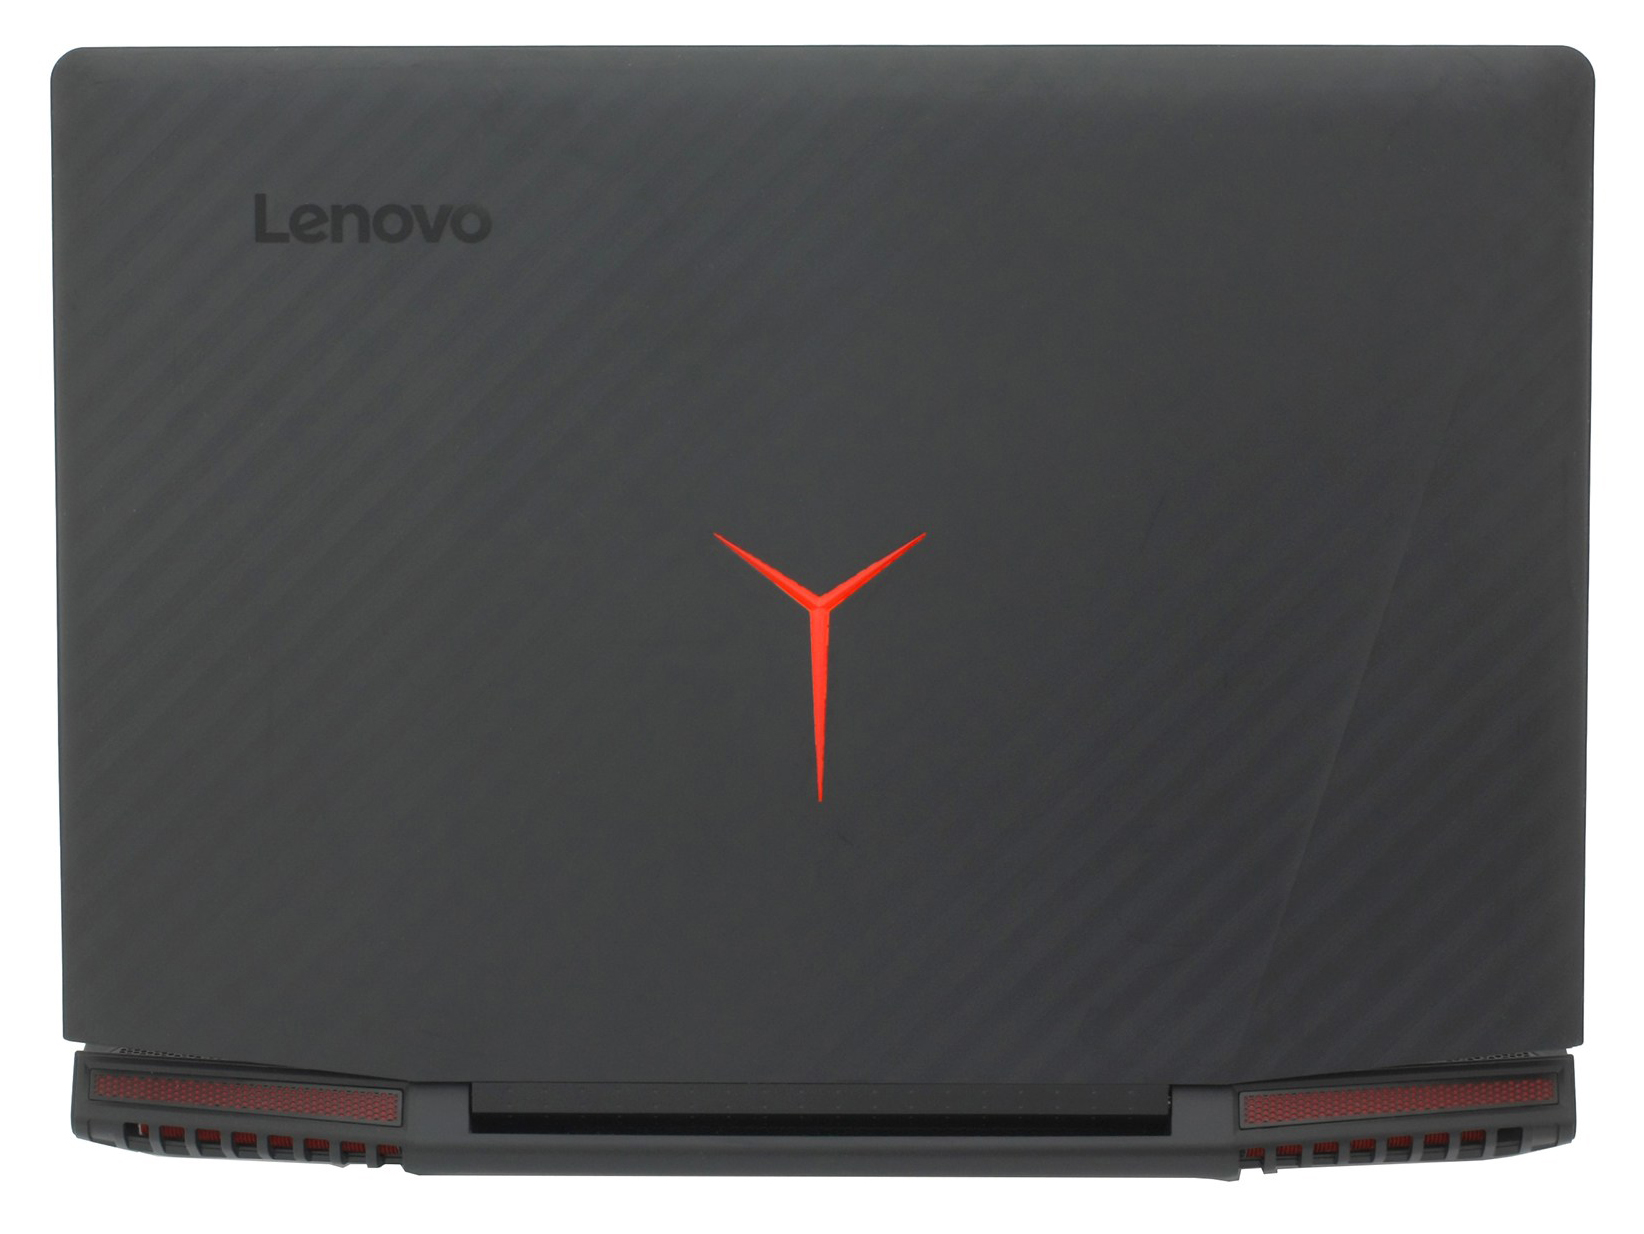 LENOVO Y720 Corei5-7300HQ RAM16GB